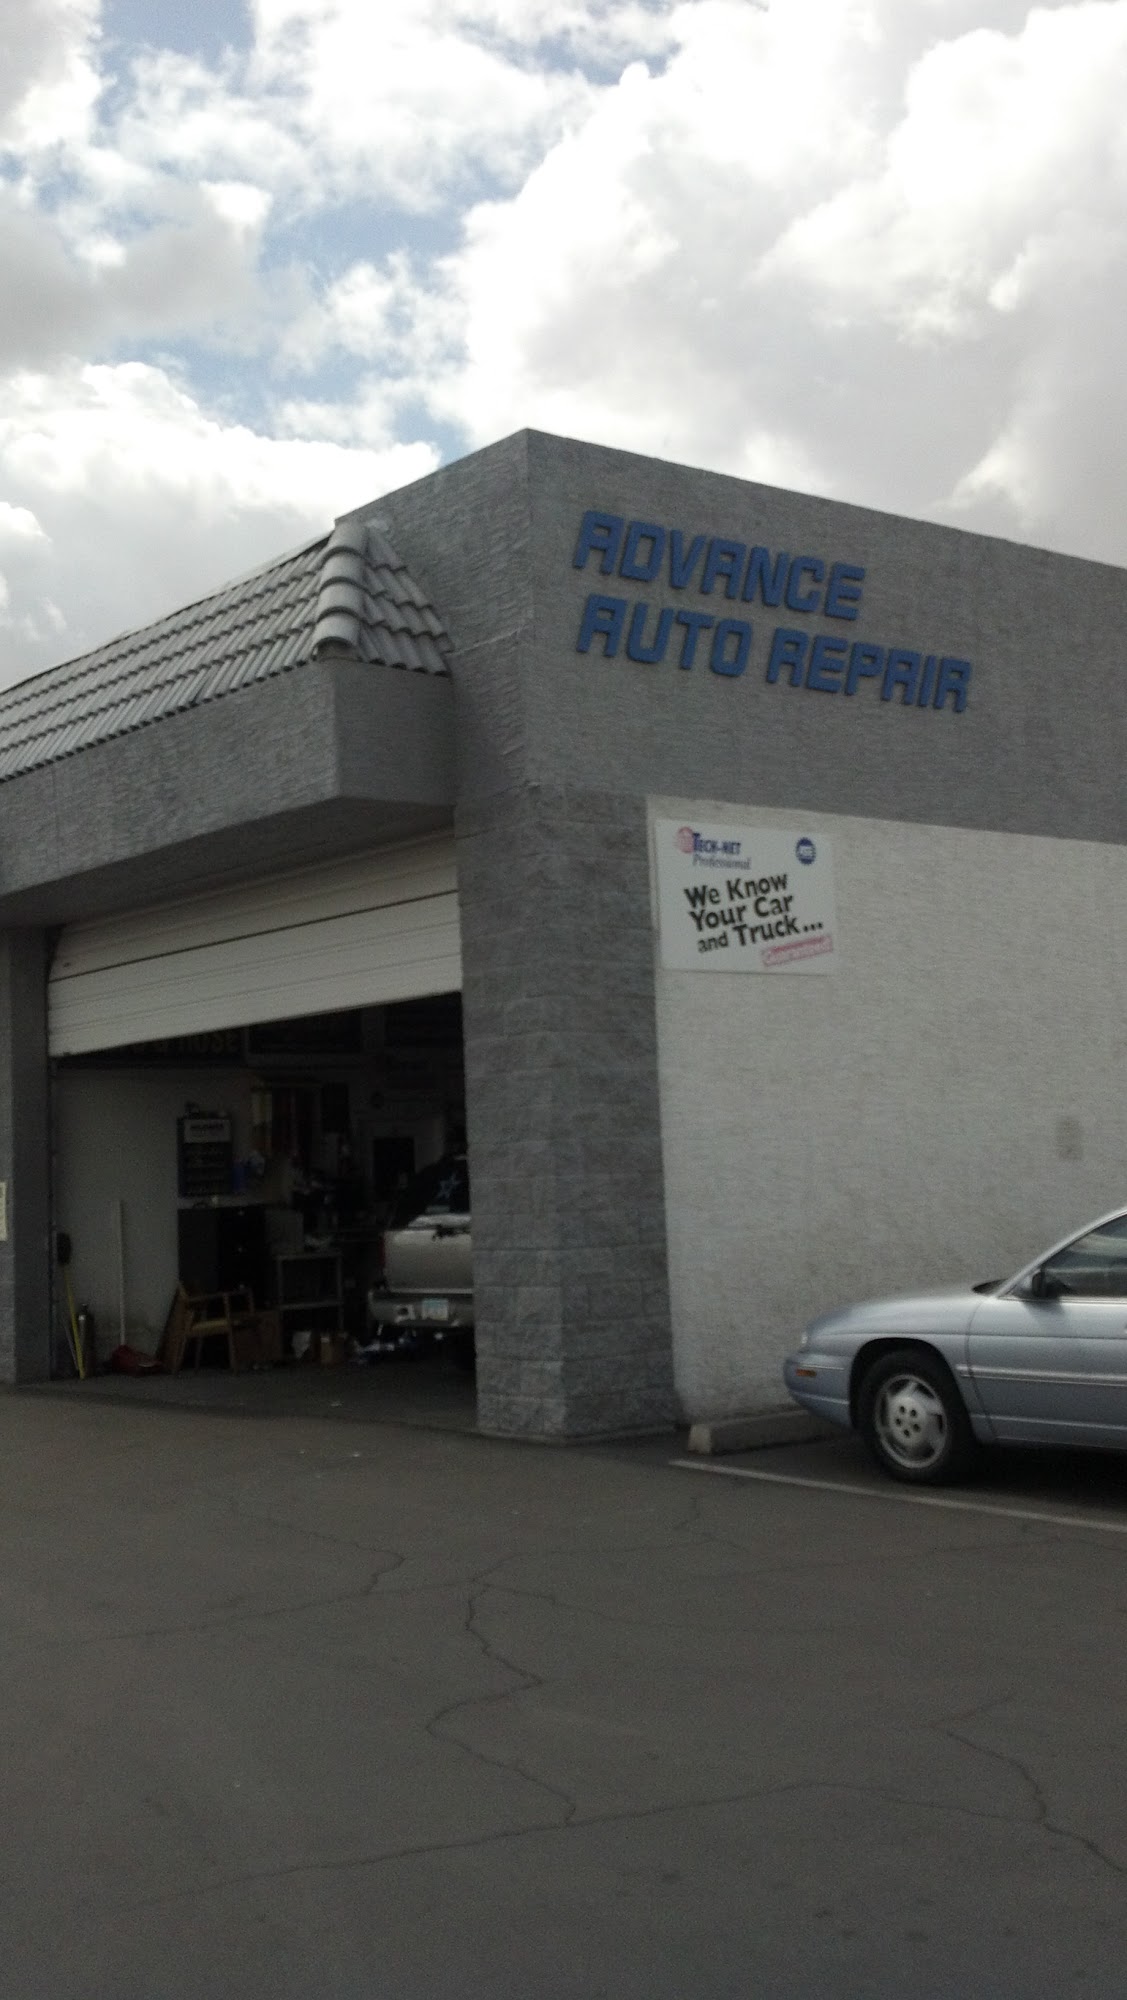 Advance Auto Repair